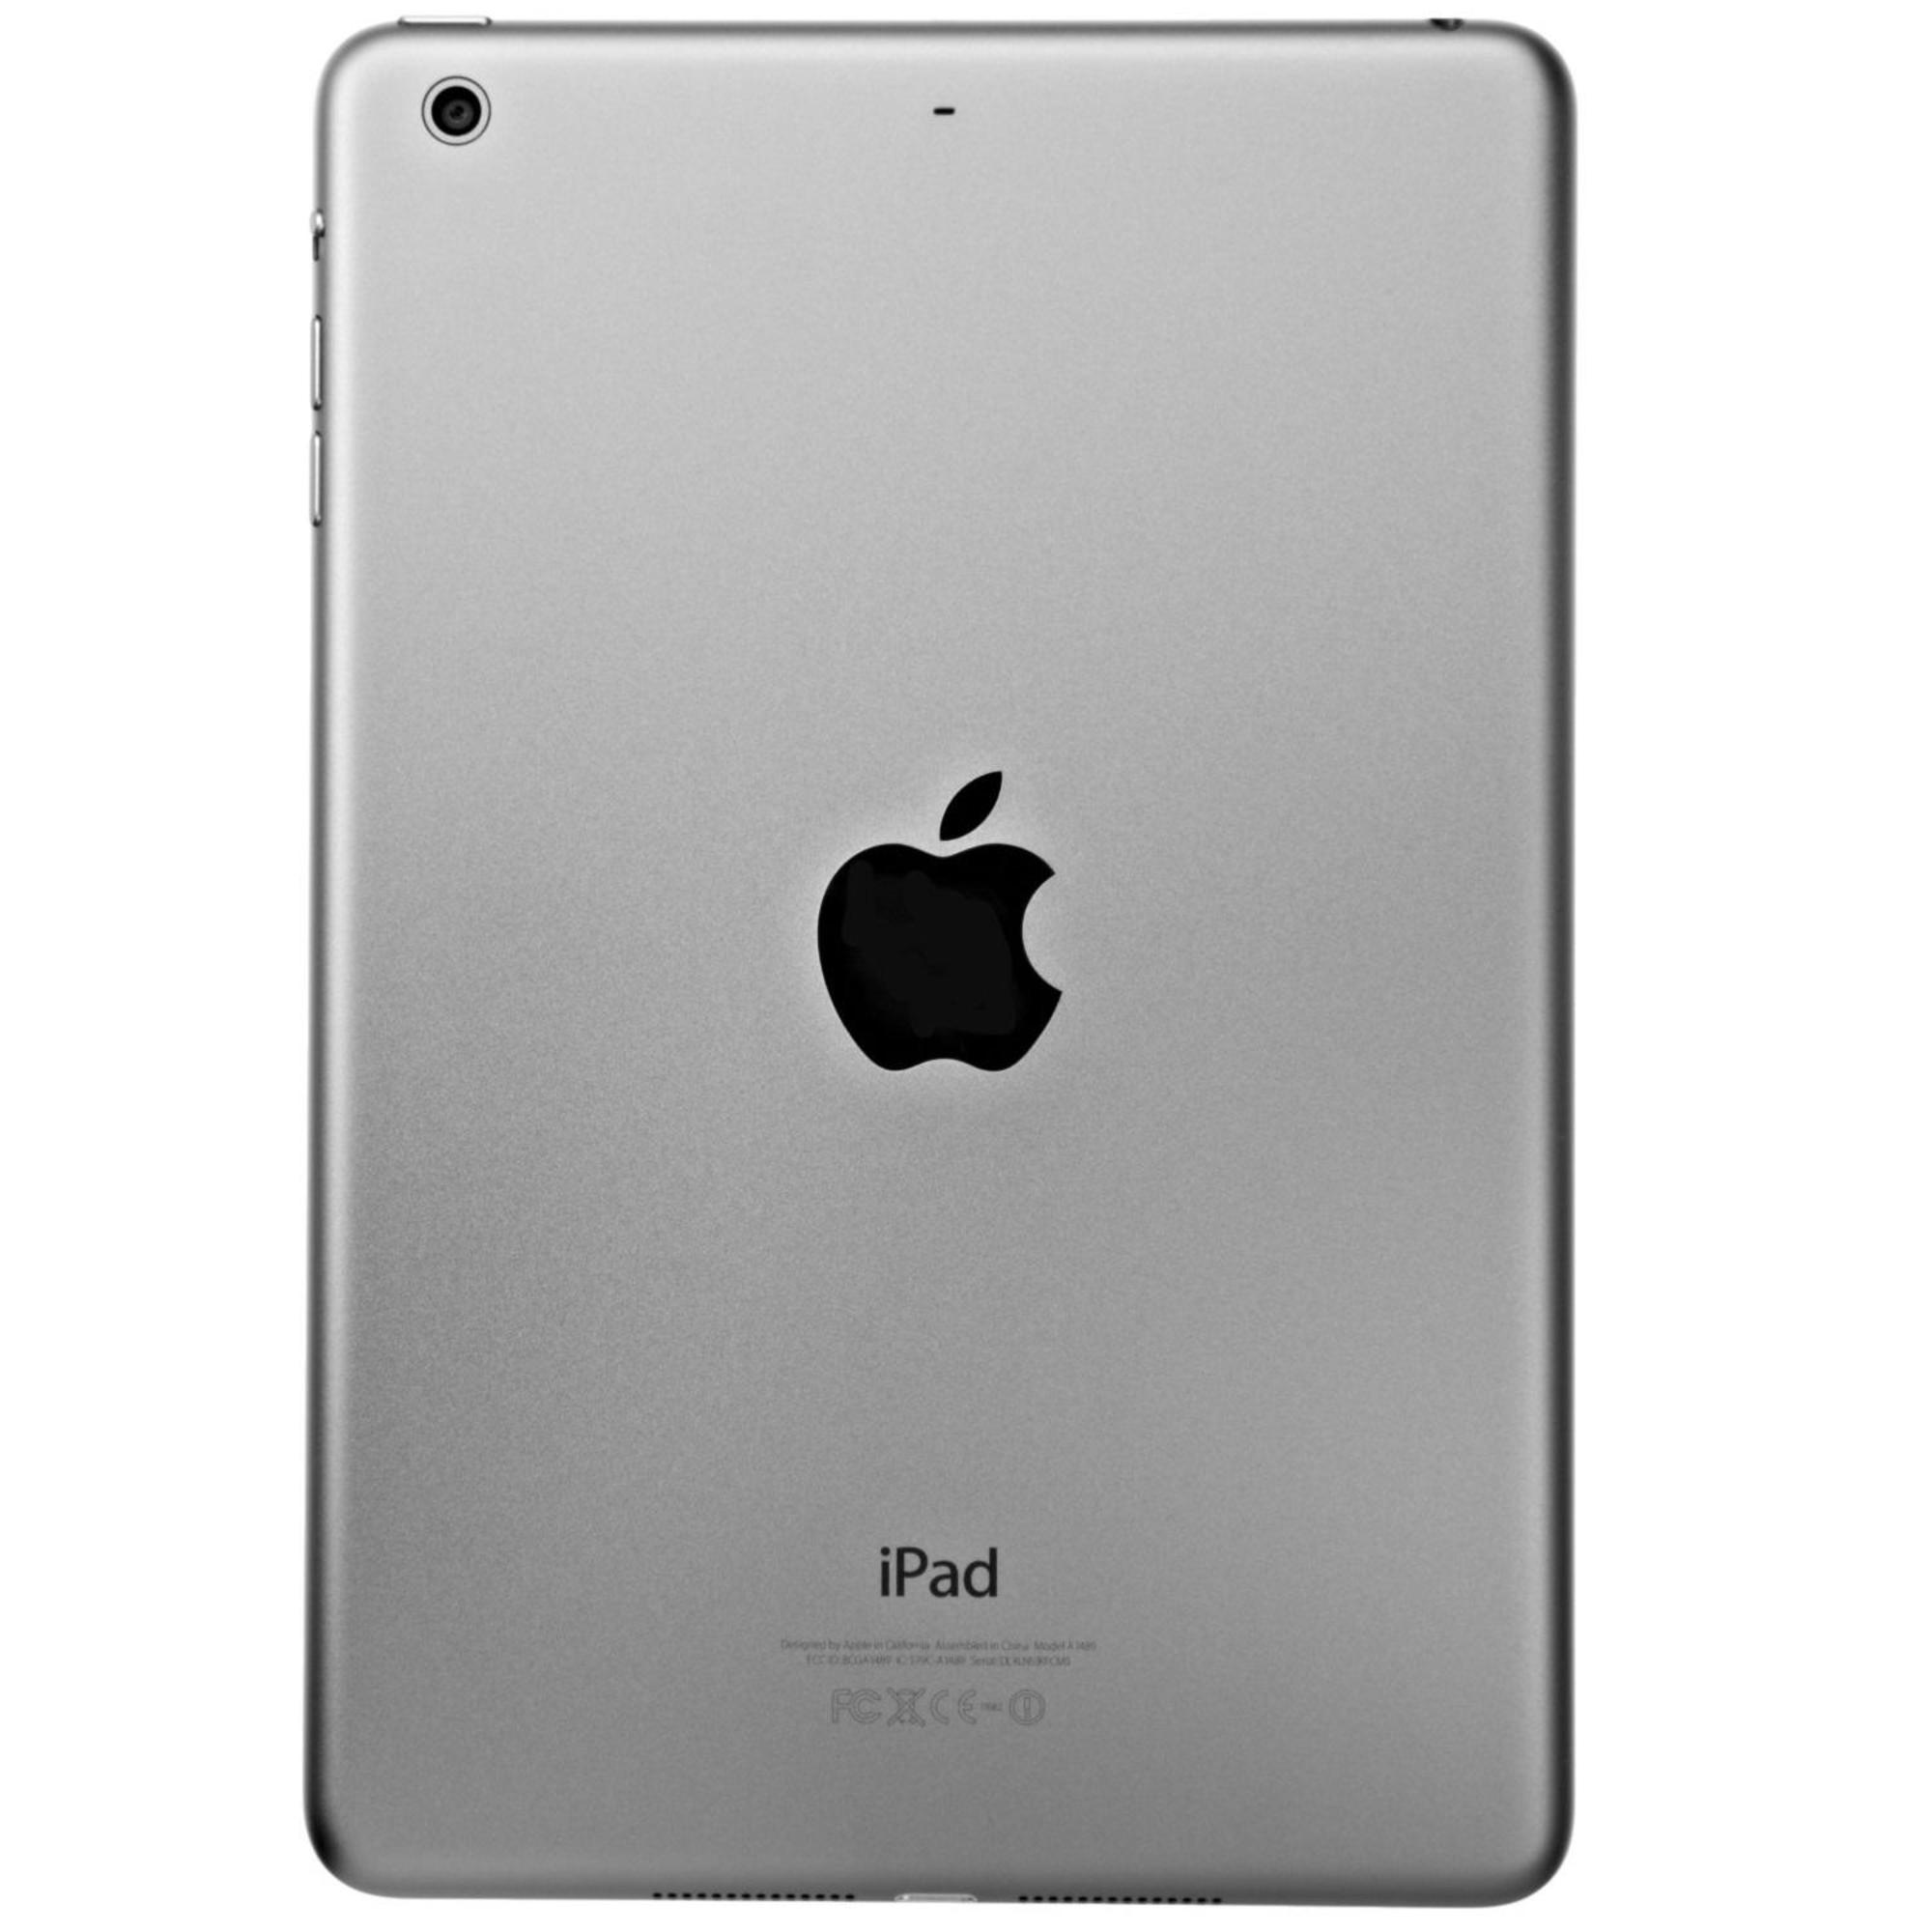 Restored Apple iPad Mini 2 16GB with Retina Display Wi-Fi Tablet - Space Gray (Refurbished) - image 2 of 2